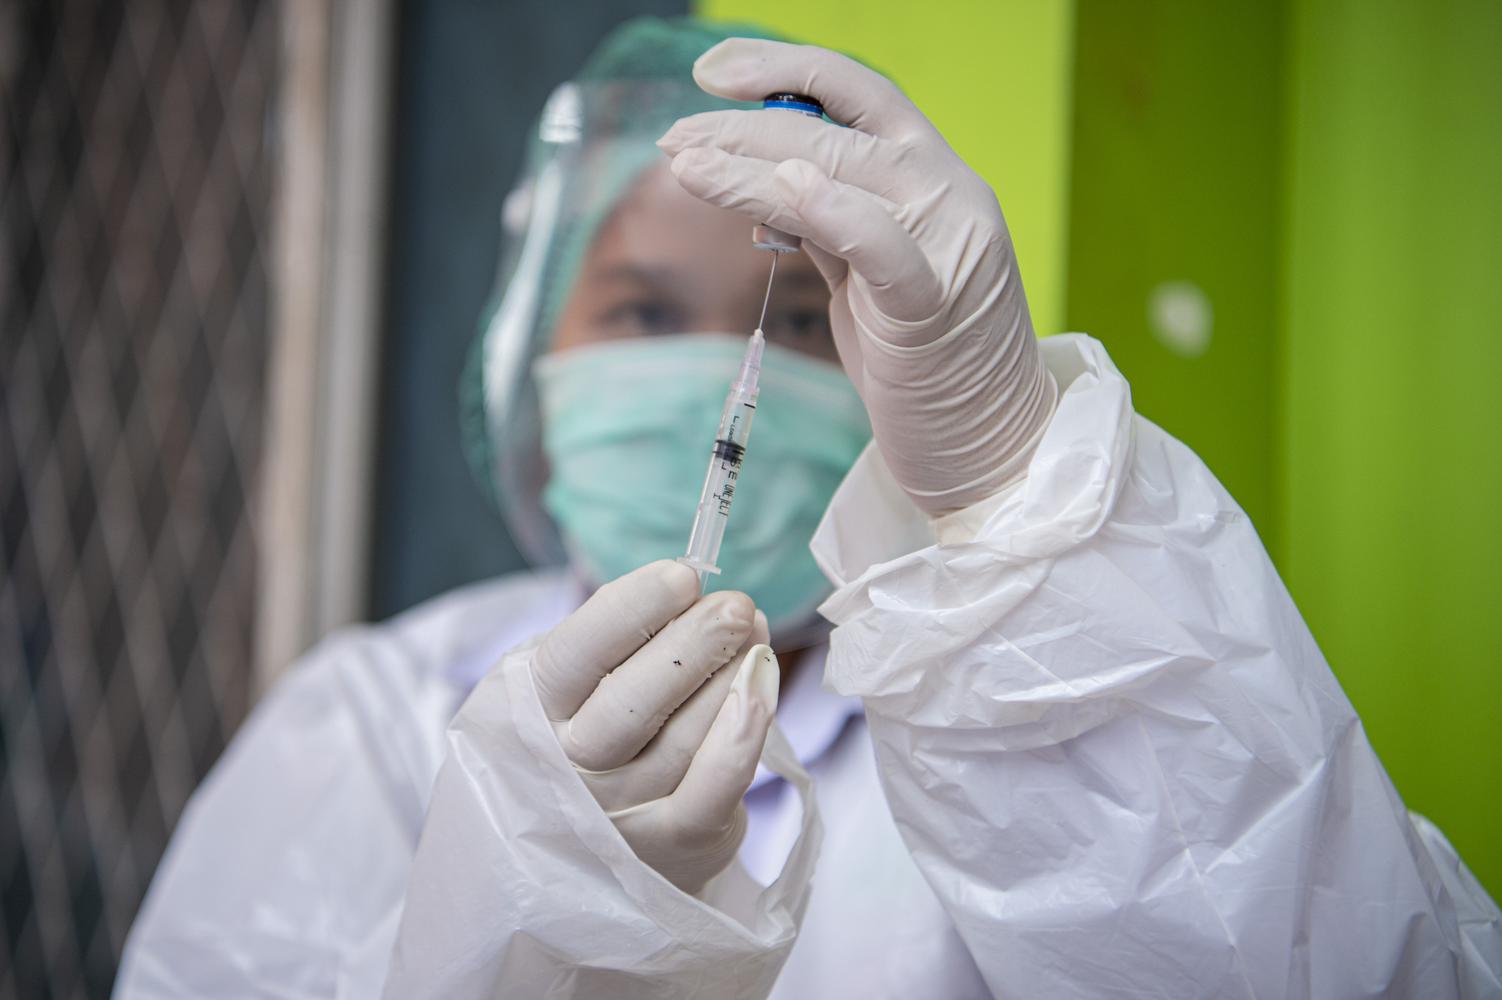 Petugas kesehatan menyiapkan vaksin saat simulasi pemberian vaksin COVID-19 Sinovac di Puskesmas Karya Jaya, Palembang, Sumatera Selatan, Rabu (13/1/2021). Simulasi tersebut digelar sebagai persiapan penyuntikan vaksin COVID-19 yang rencananya akan dilakukan oleh Pemerintah Kota Palembang pada 14 Januari.